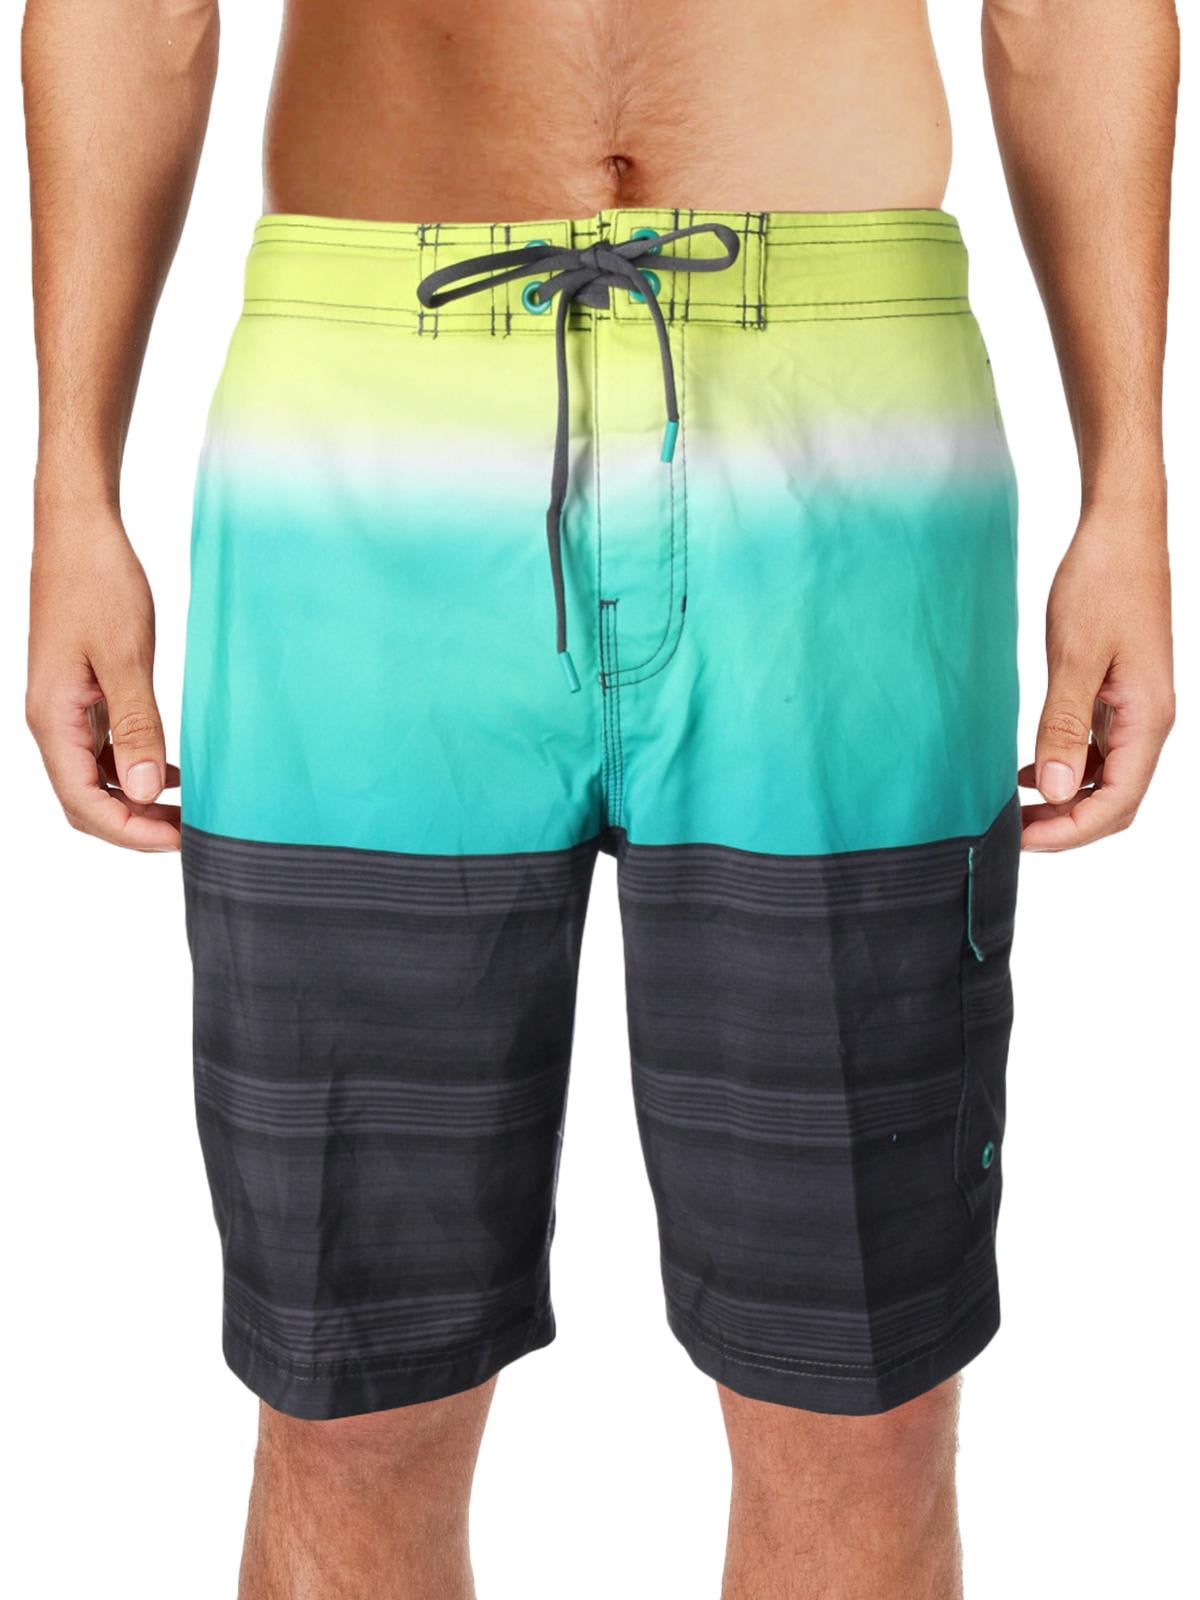 Speedo - Speedo Mens Pattern Quick Dry Board Shorts - Walmart.com ...